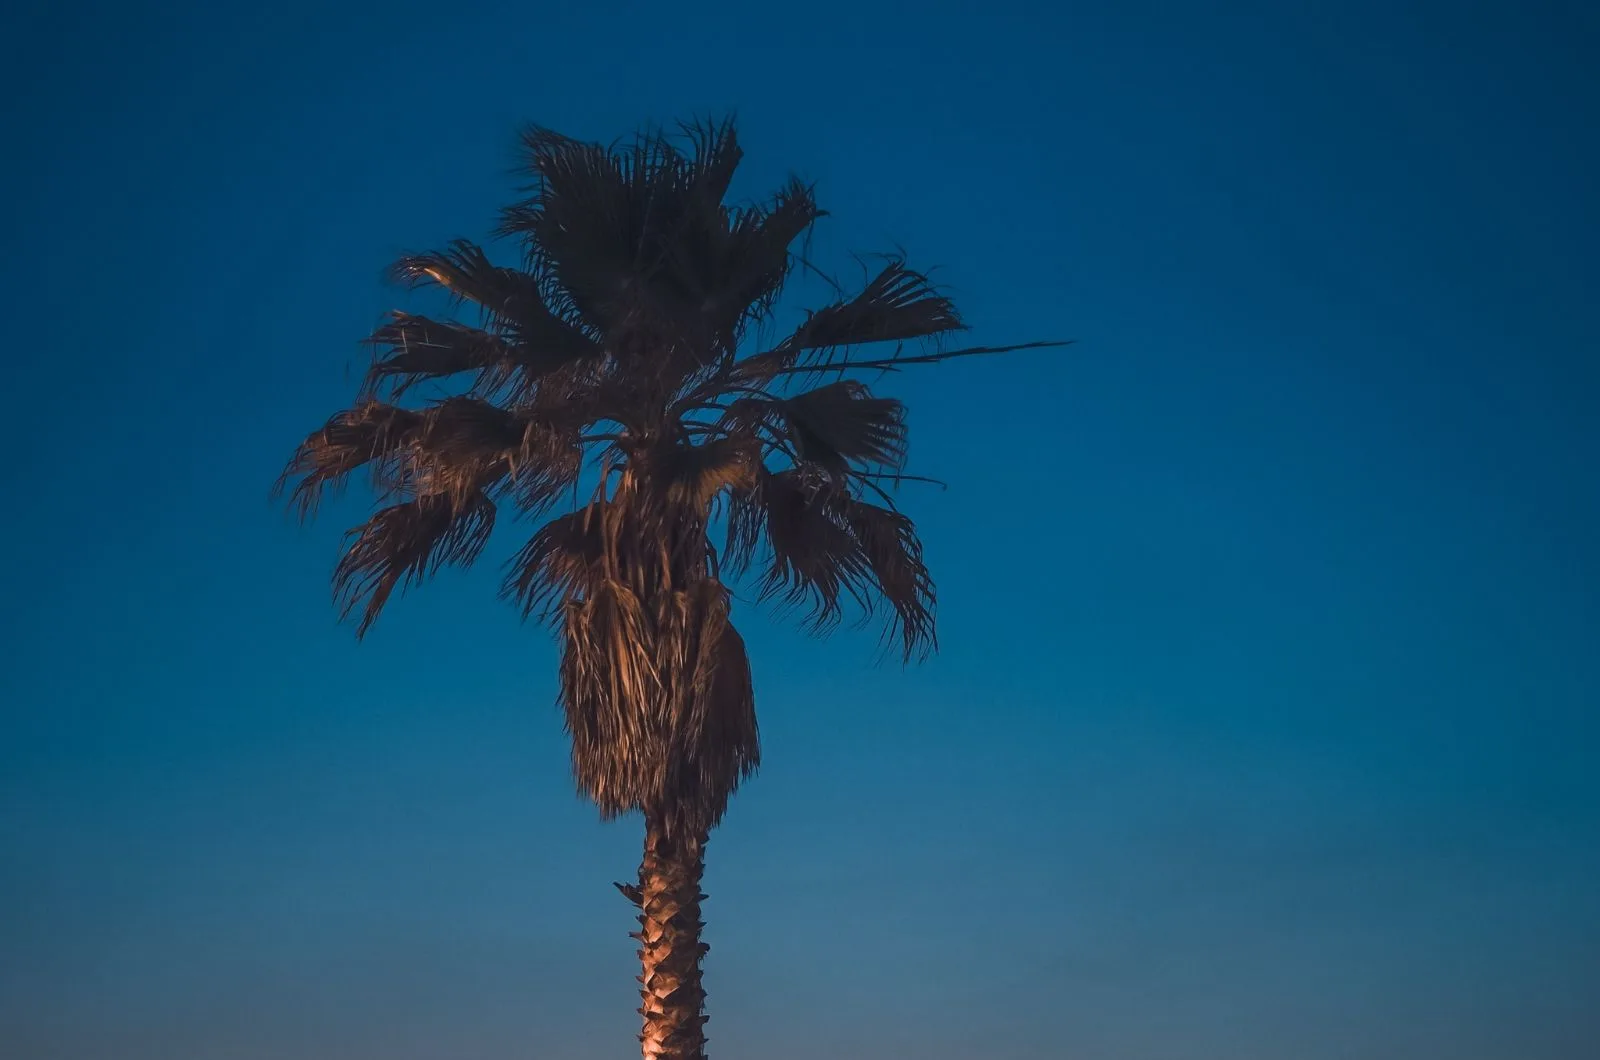 King Palm Tree at night